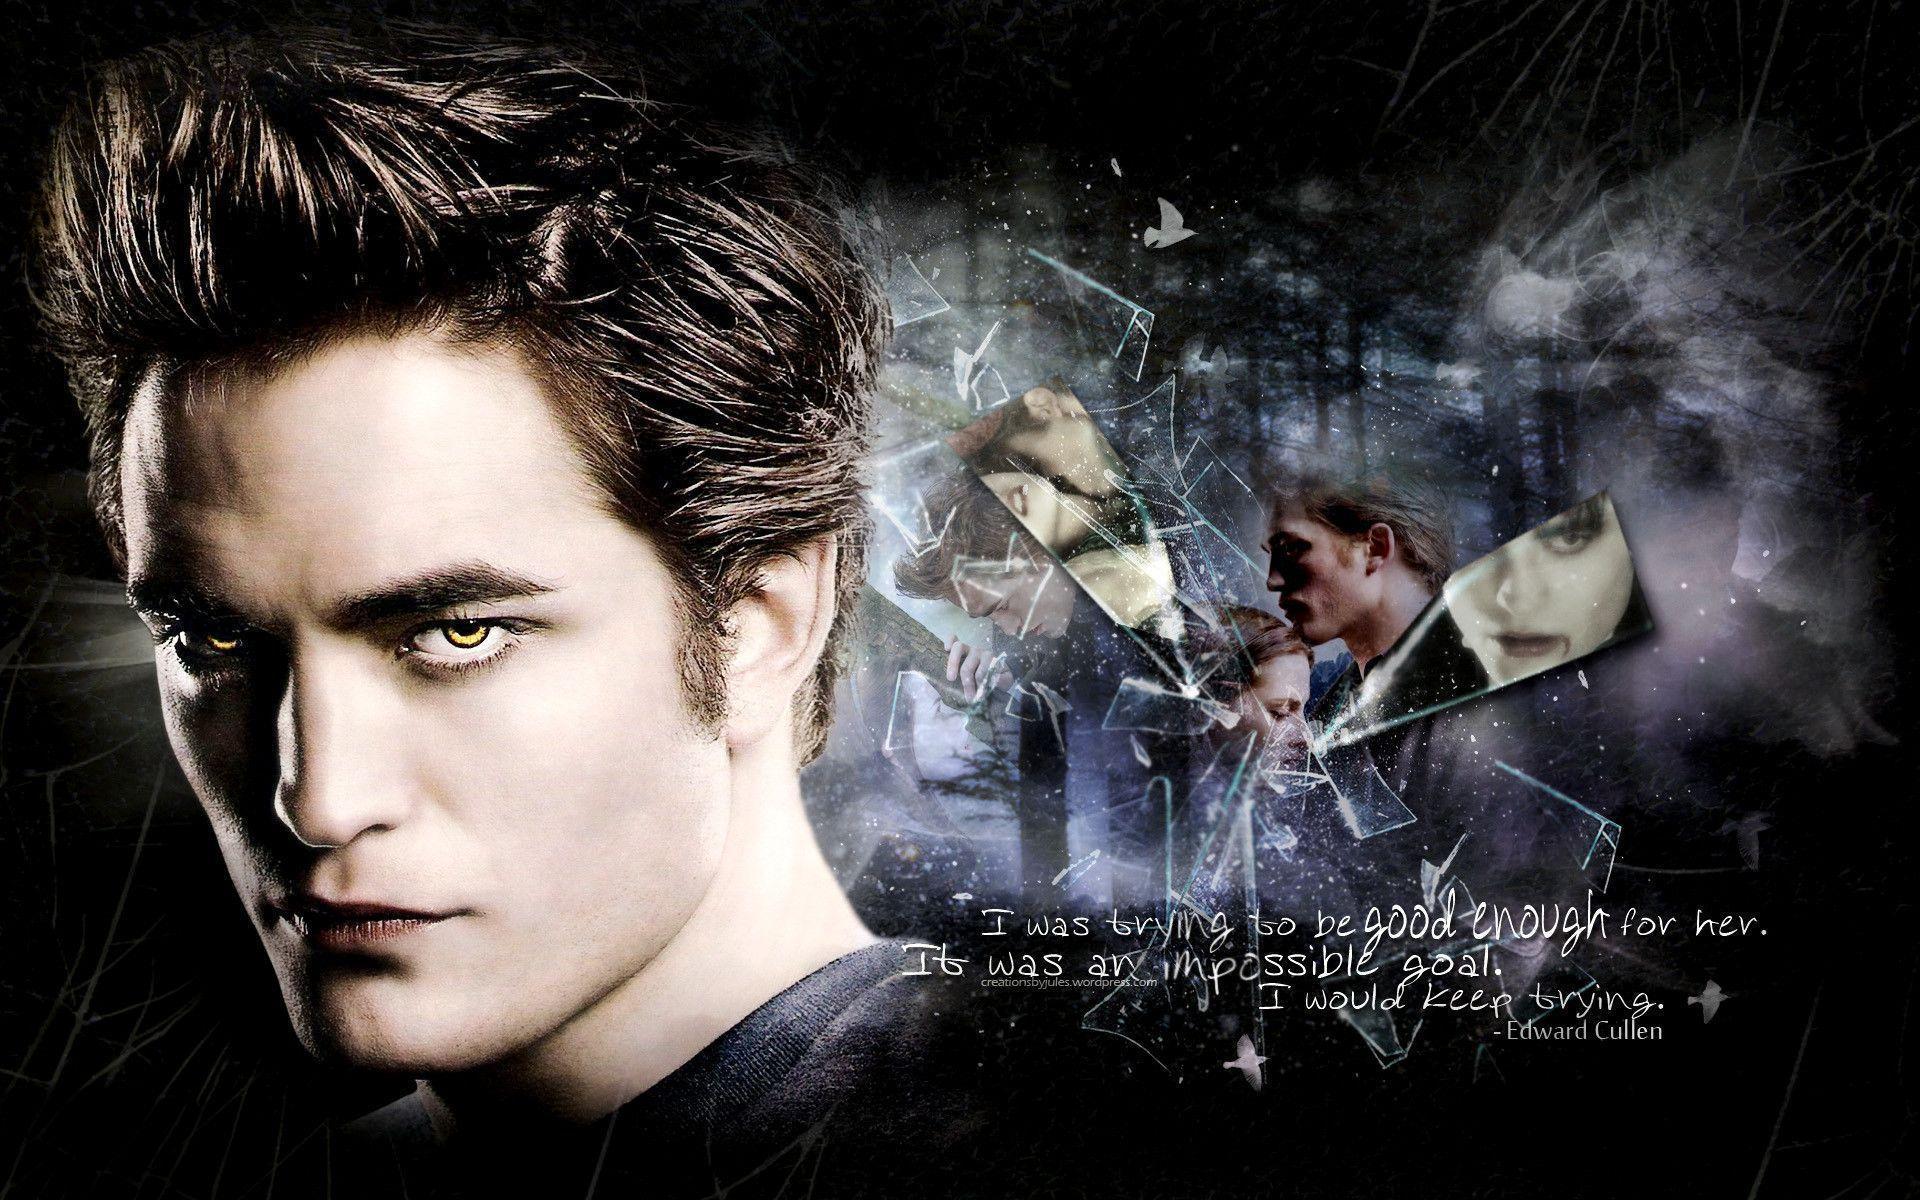 Fondos de pantalla de Edward Cullen. Wallpaper de Edward Cullen